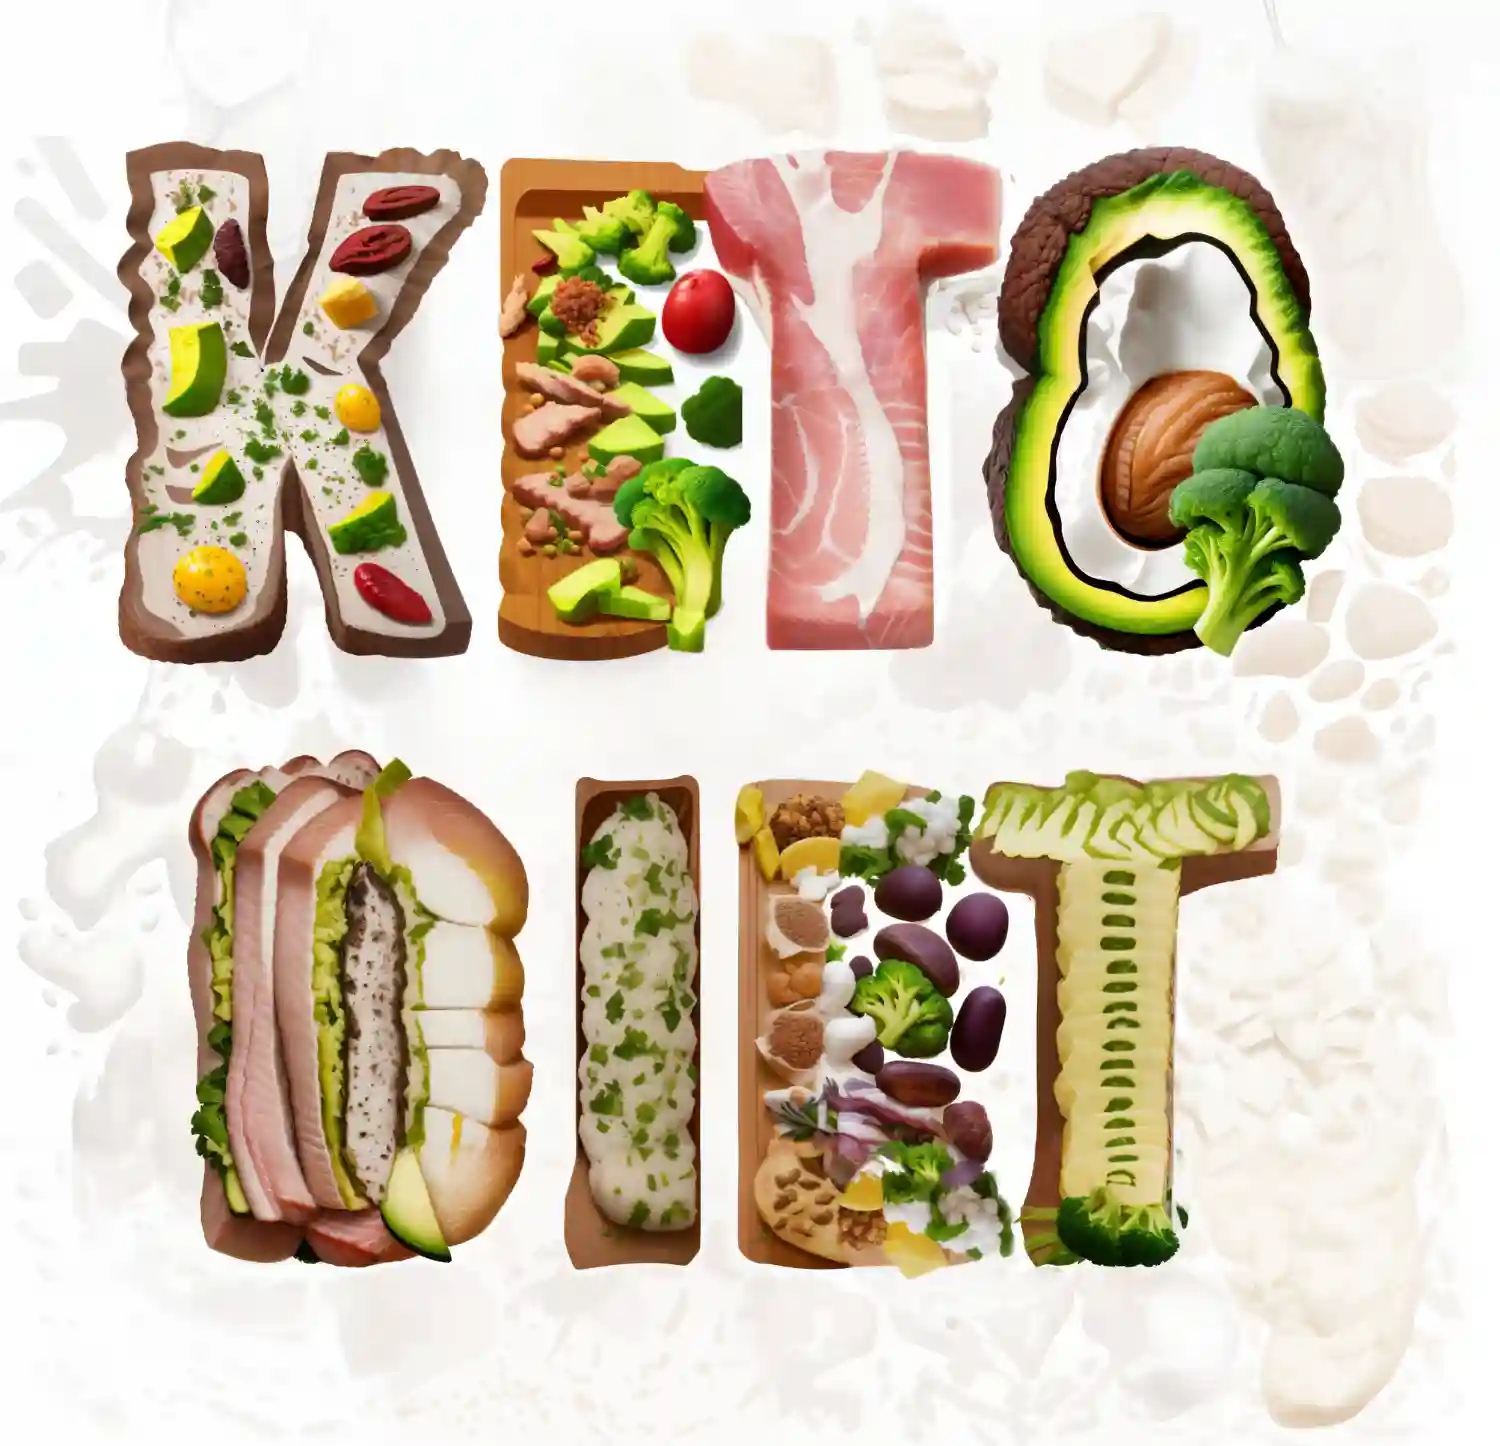 Keto diet feature image